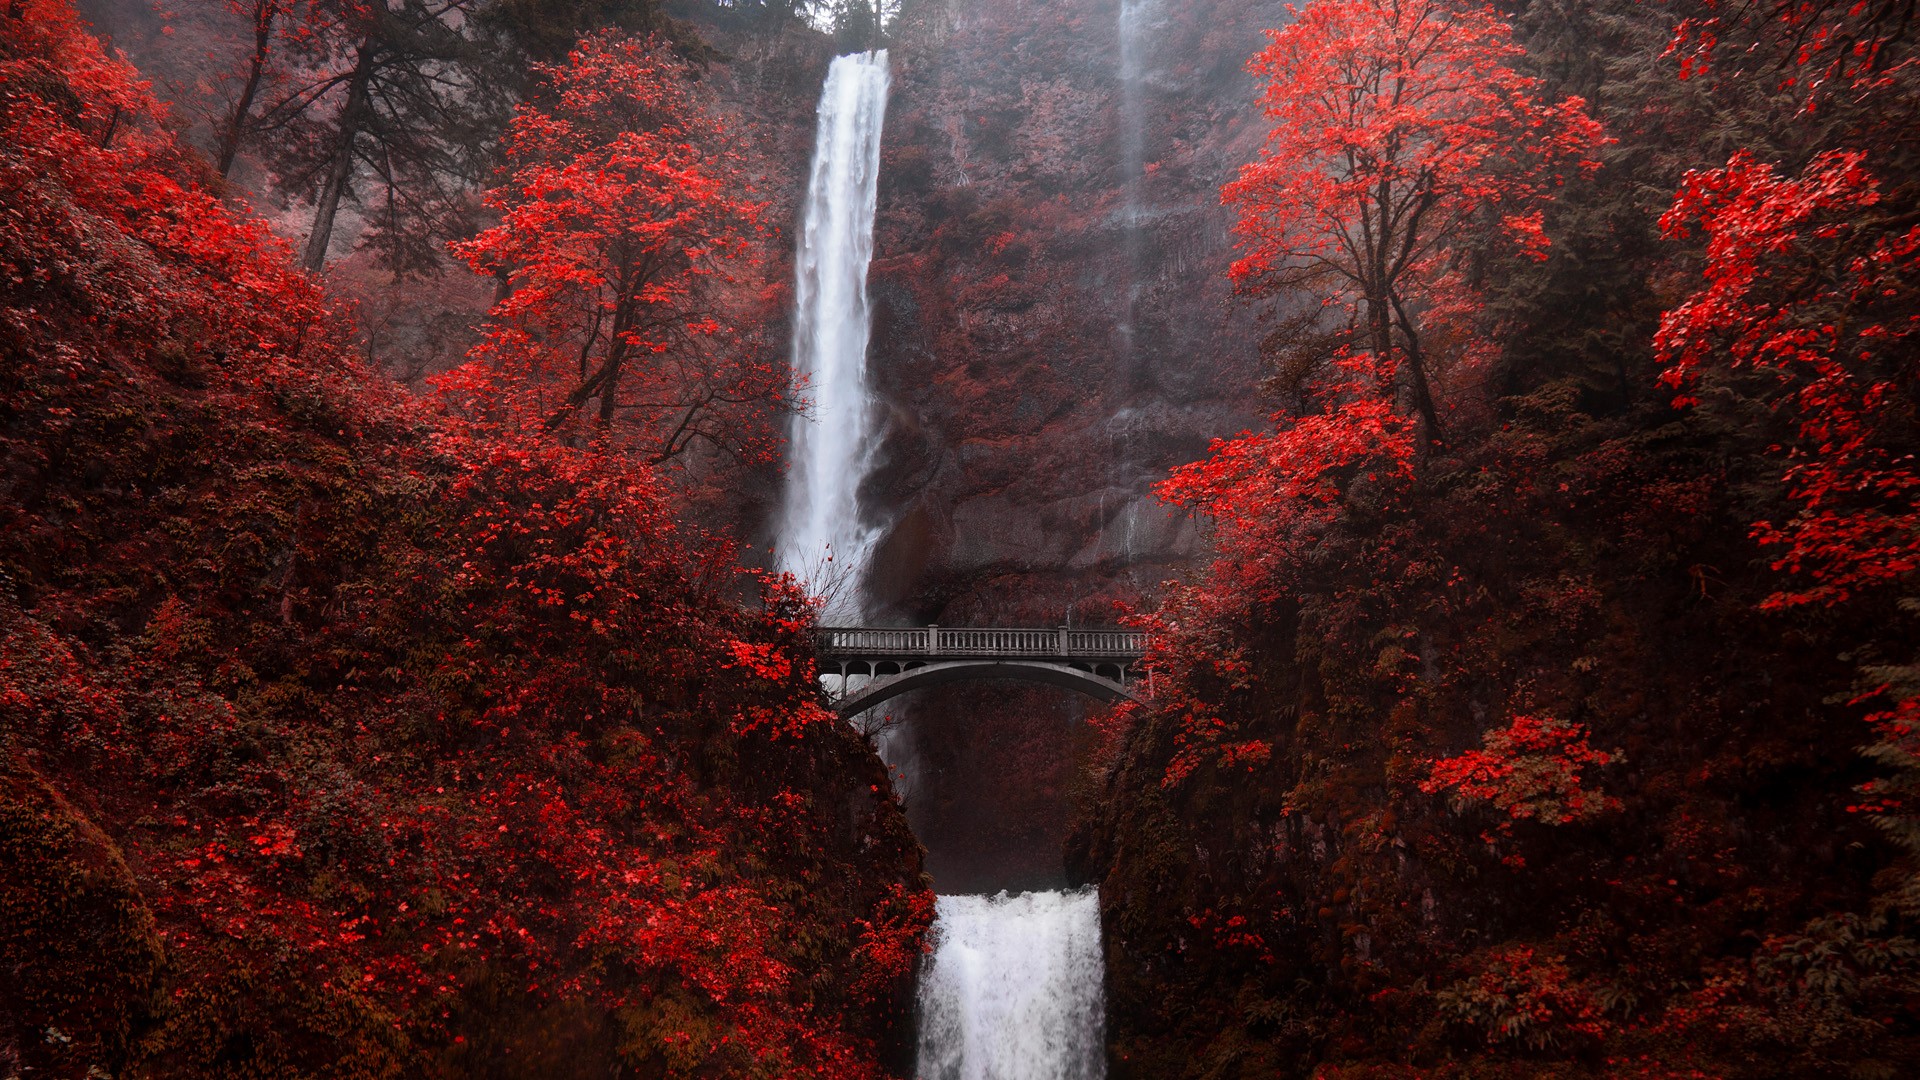 Multnomah Falls waterfall bridge in autumn red, Portland, Oregon, USA |  Windows 10 Spotlight Images